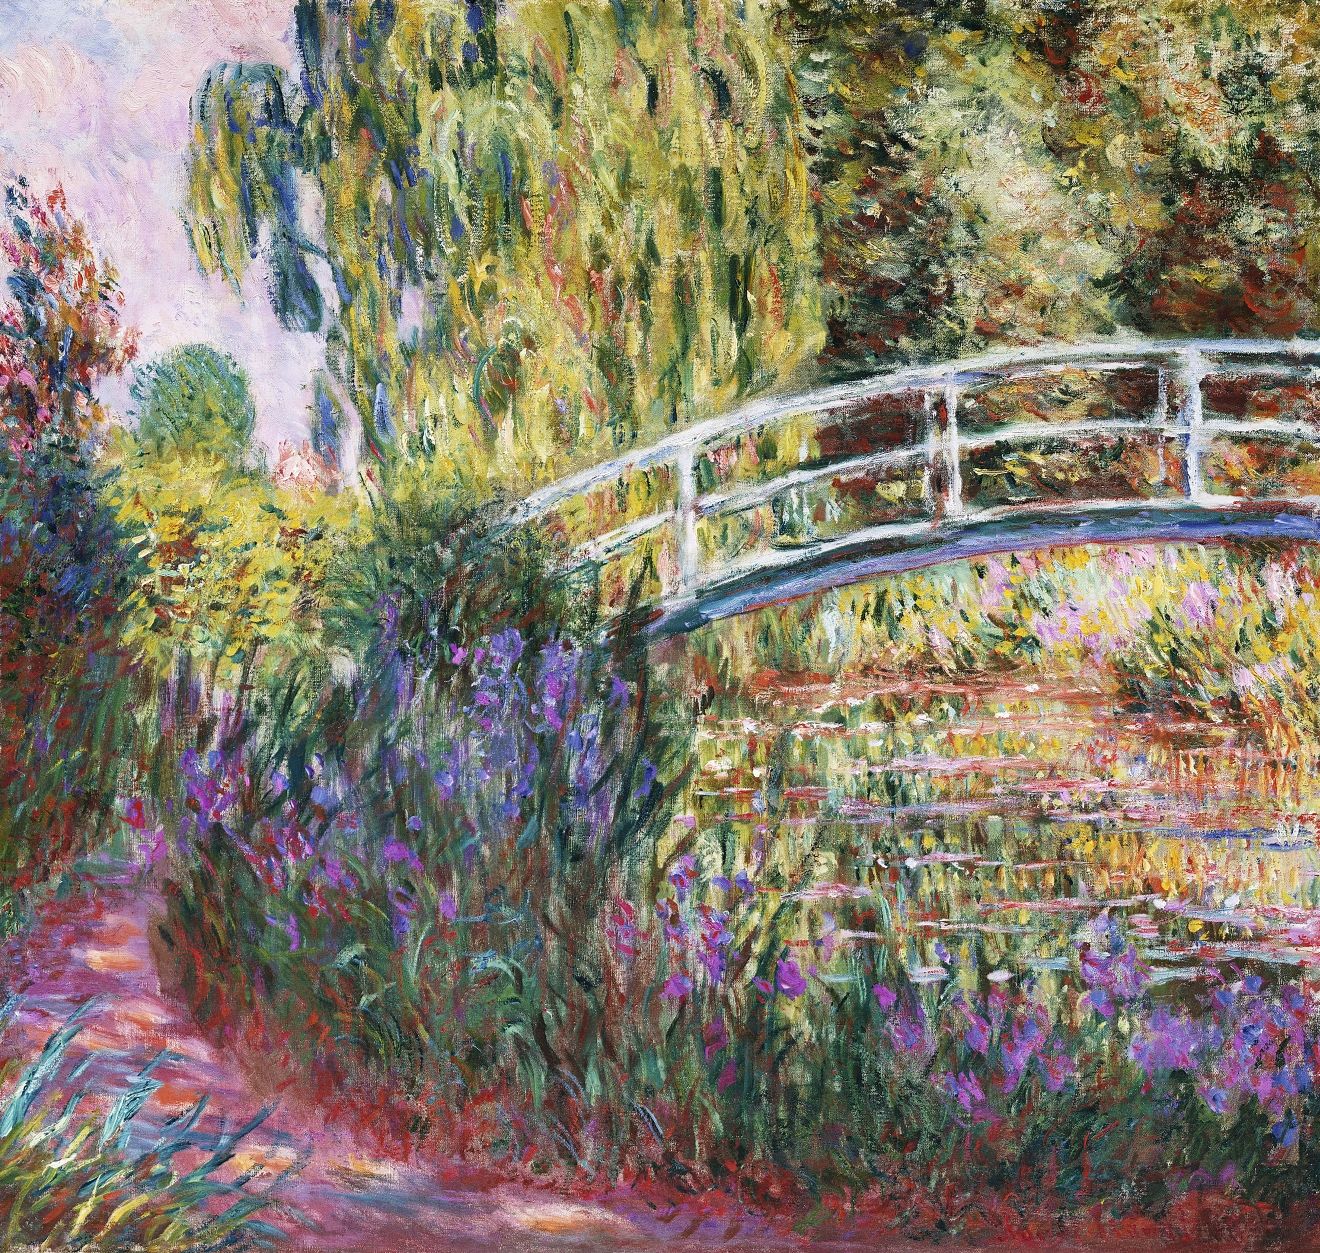 Claude+Monet-1840-1926 (132).jpg